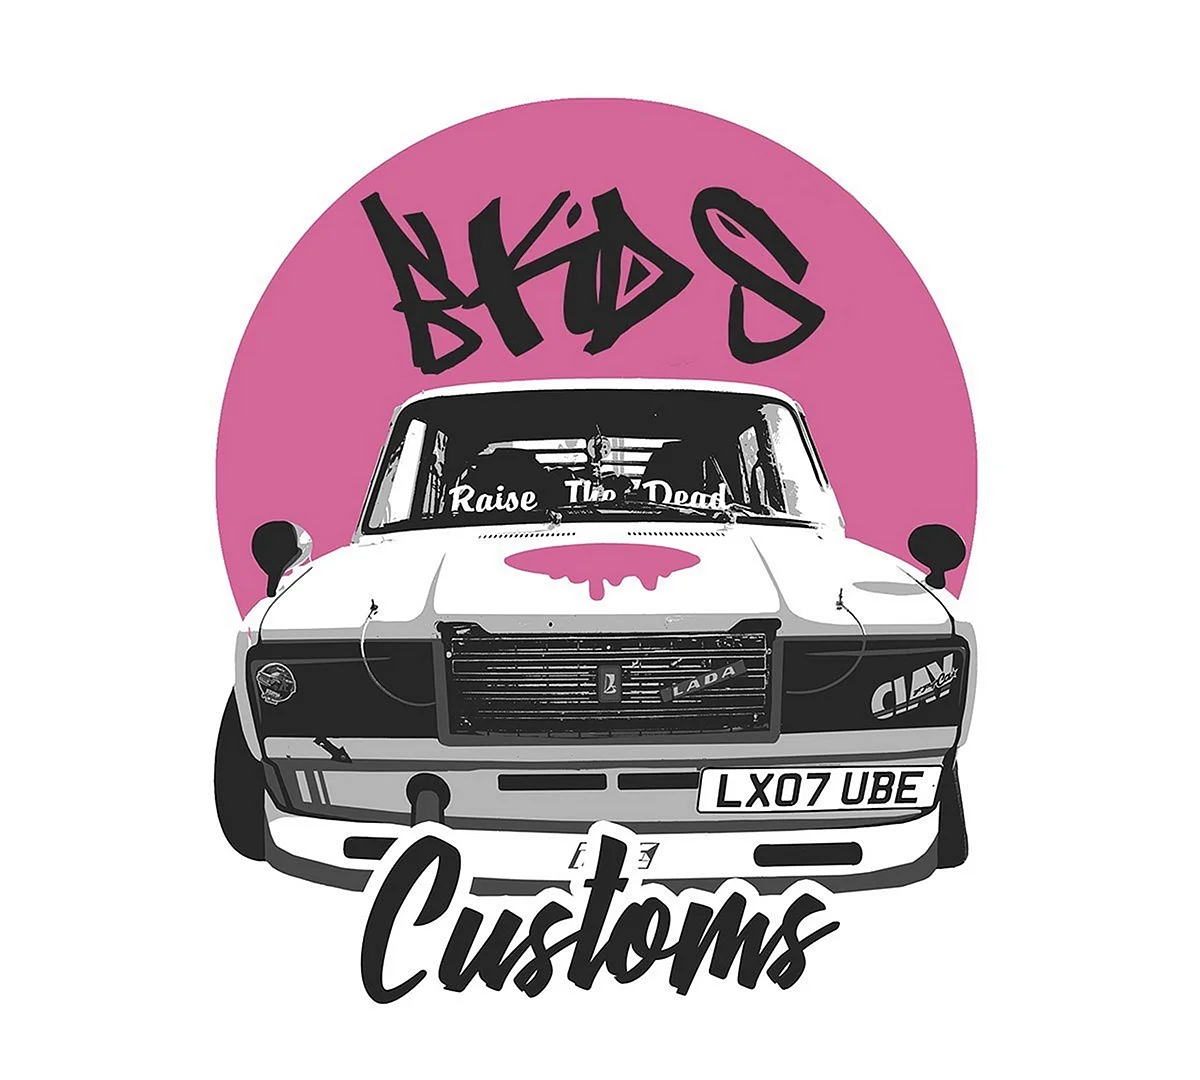 BKDS Customs Боевая классика MTA сервер